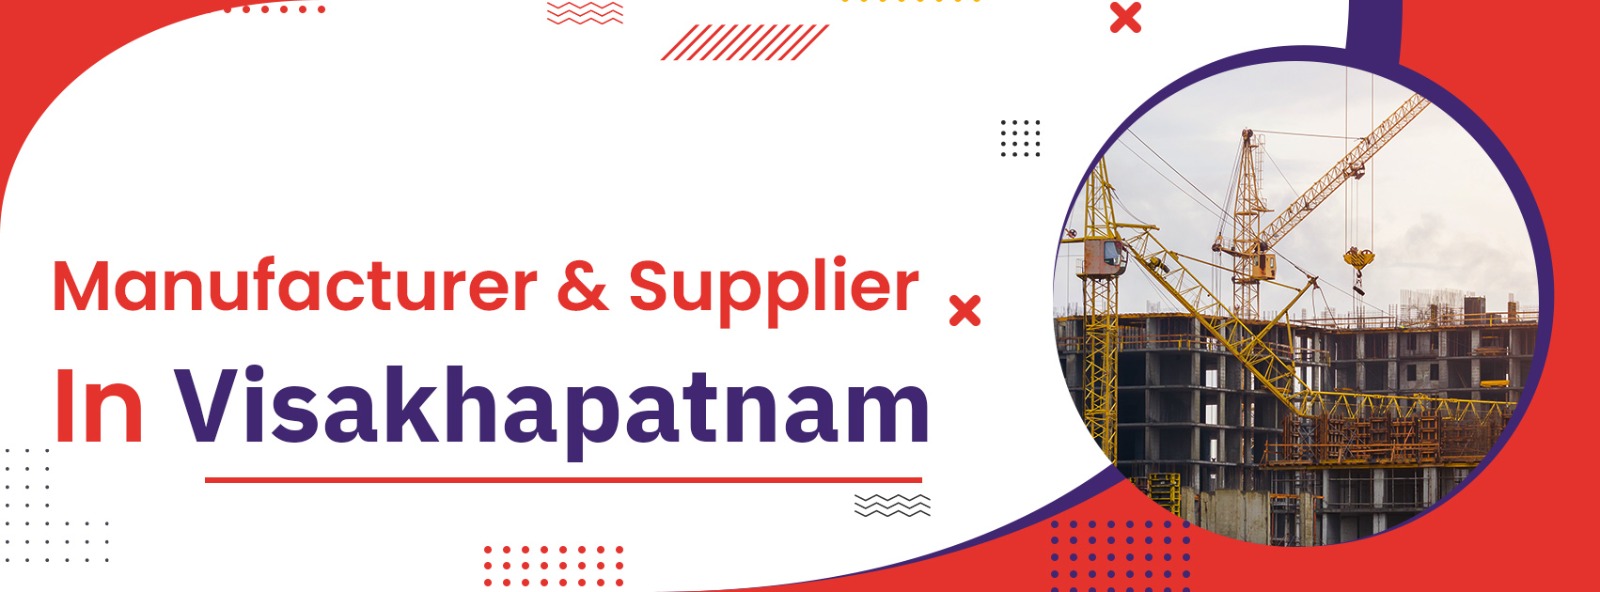 Scaffolding Manufacturer & Supplier In Visakhapatnam